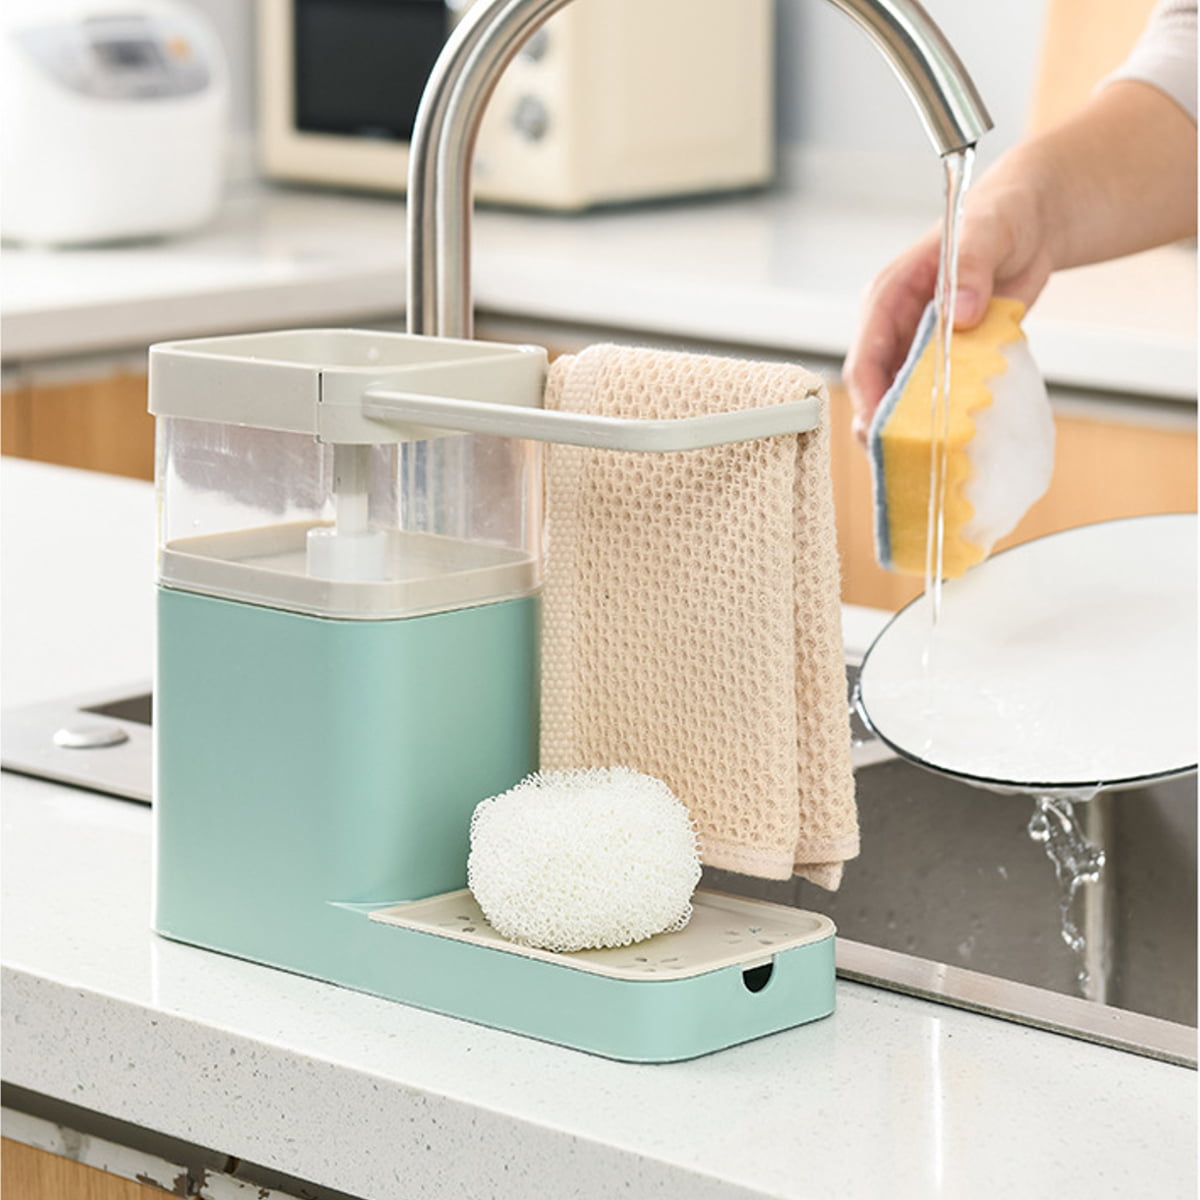 Details about   Novelty Kitchen Sink Sponge Holder Organizer Countertop Soap Tray Sponge Holder